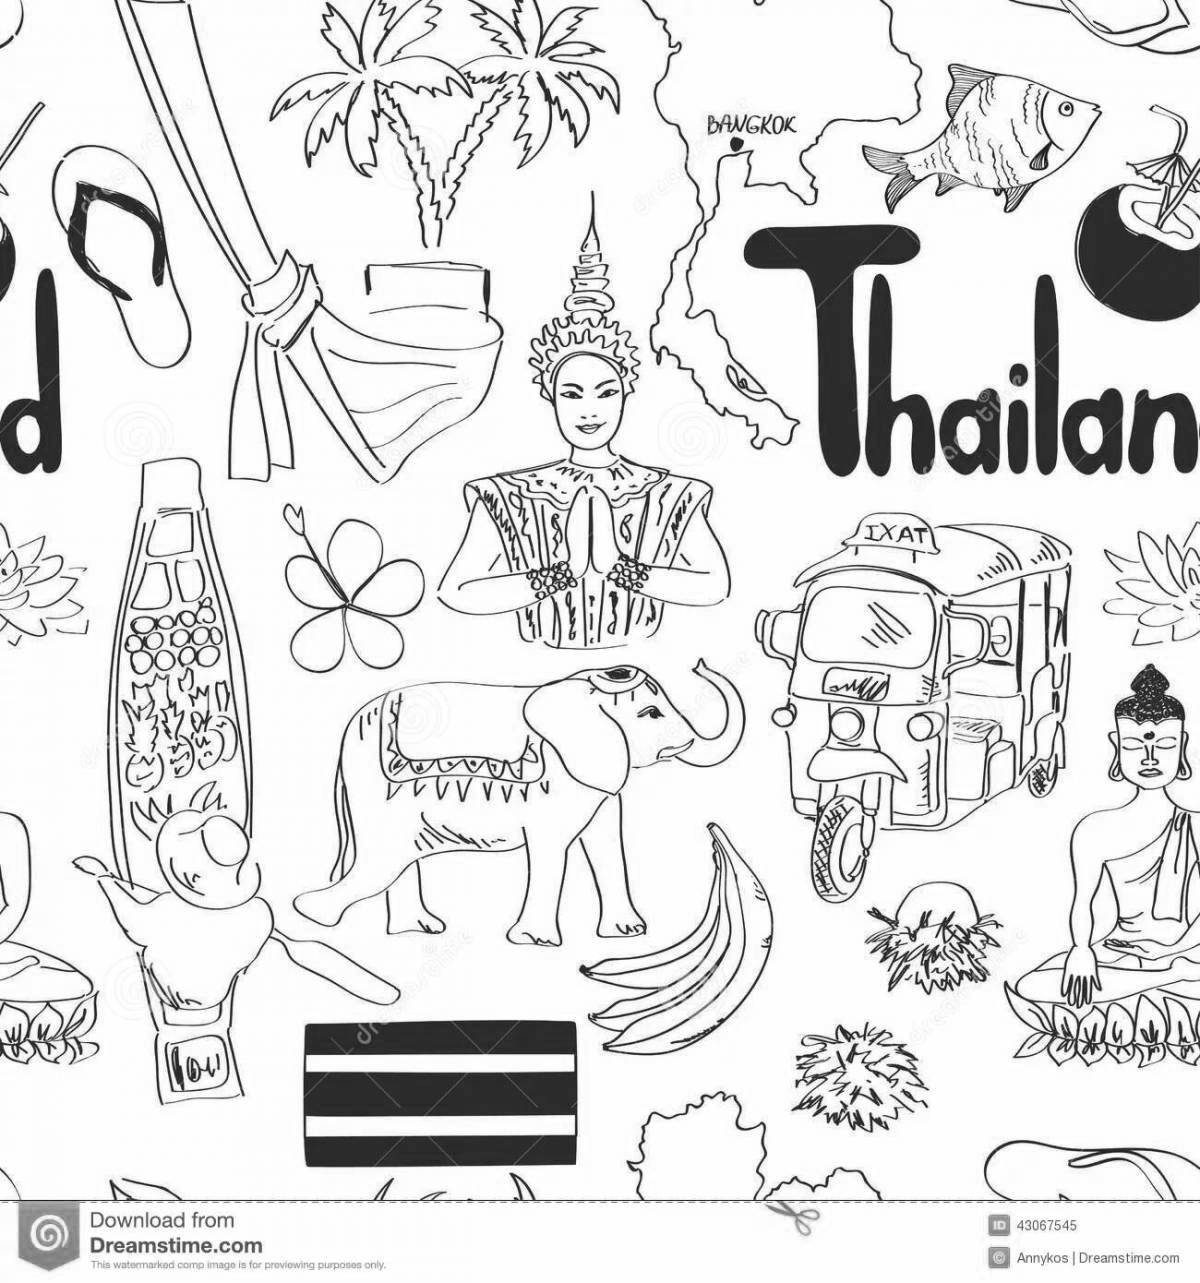 Bright thailand coloring book